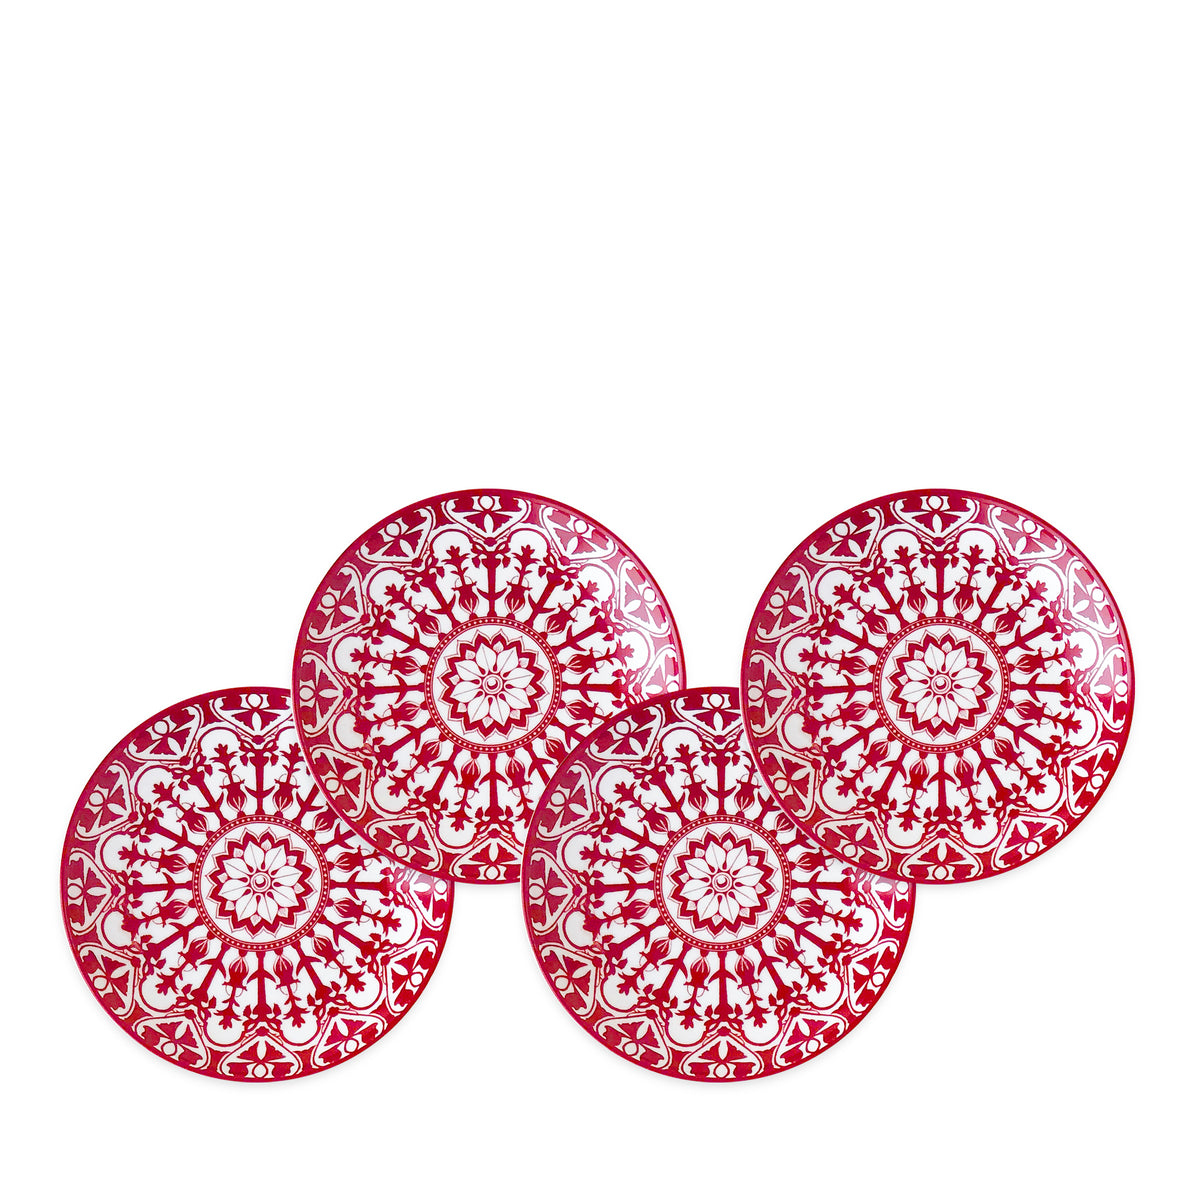 Casablanca Crimson Red and White porcelain dinnerware canape plates- set of 4 from Caskata